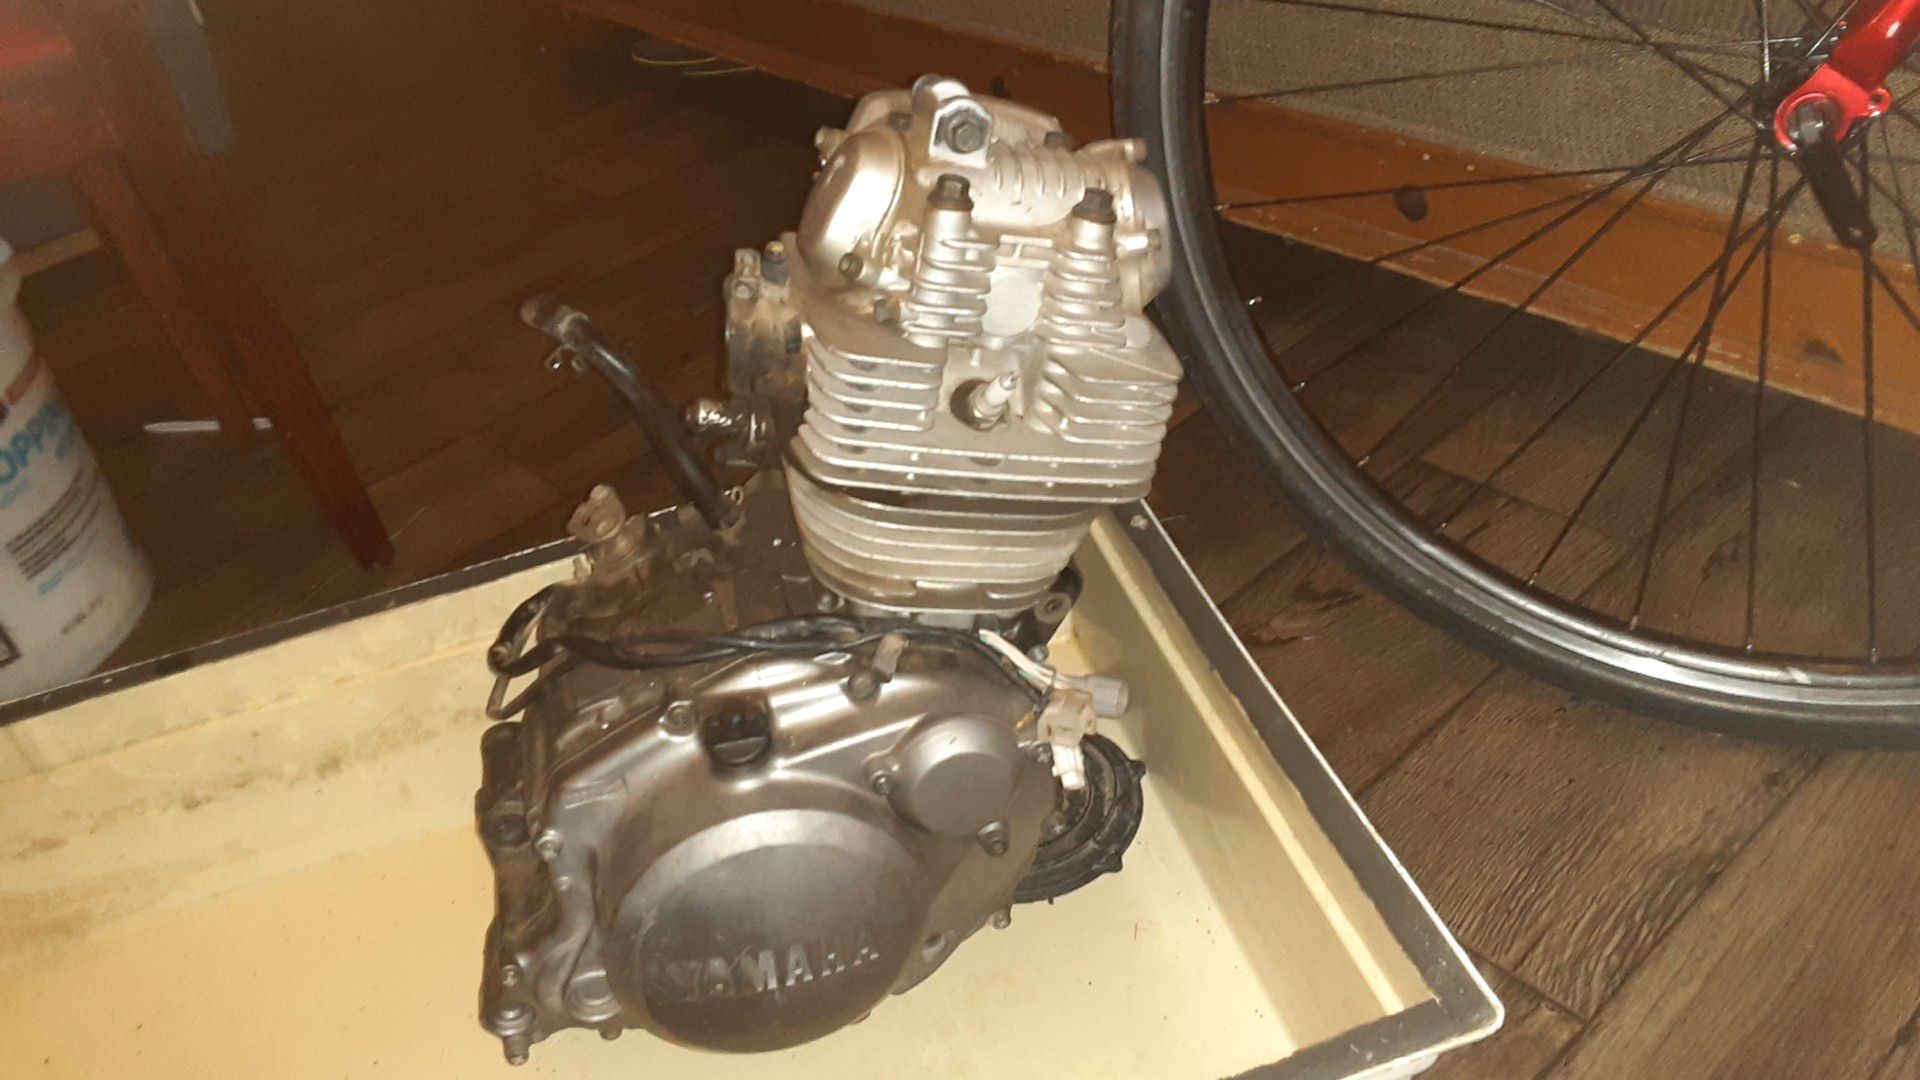 Yamaha 1000cm3 engine and accessories